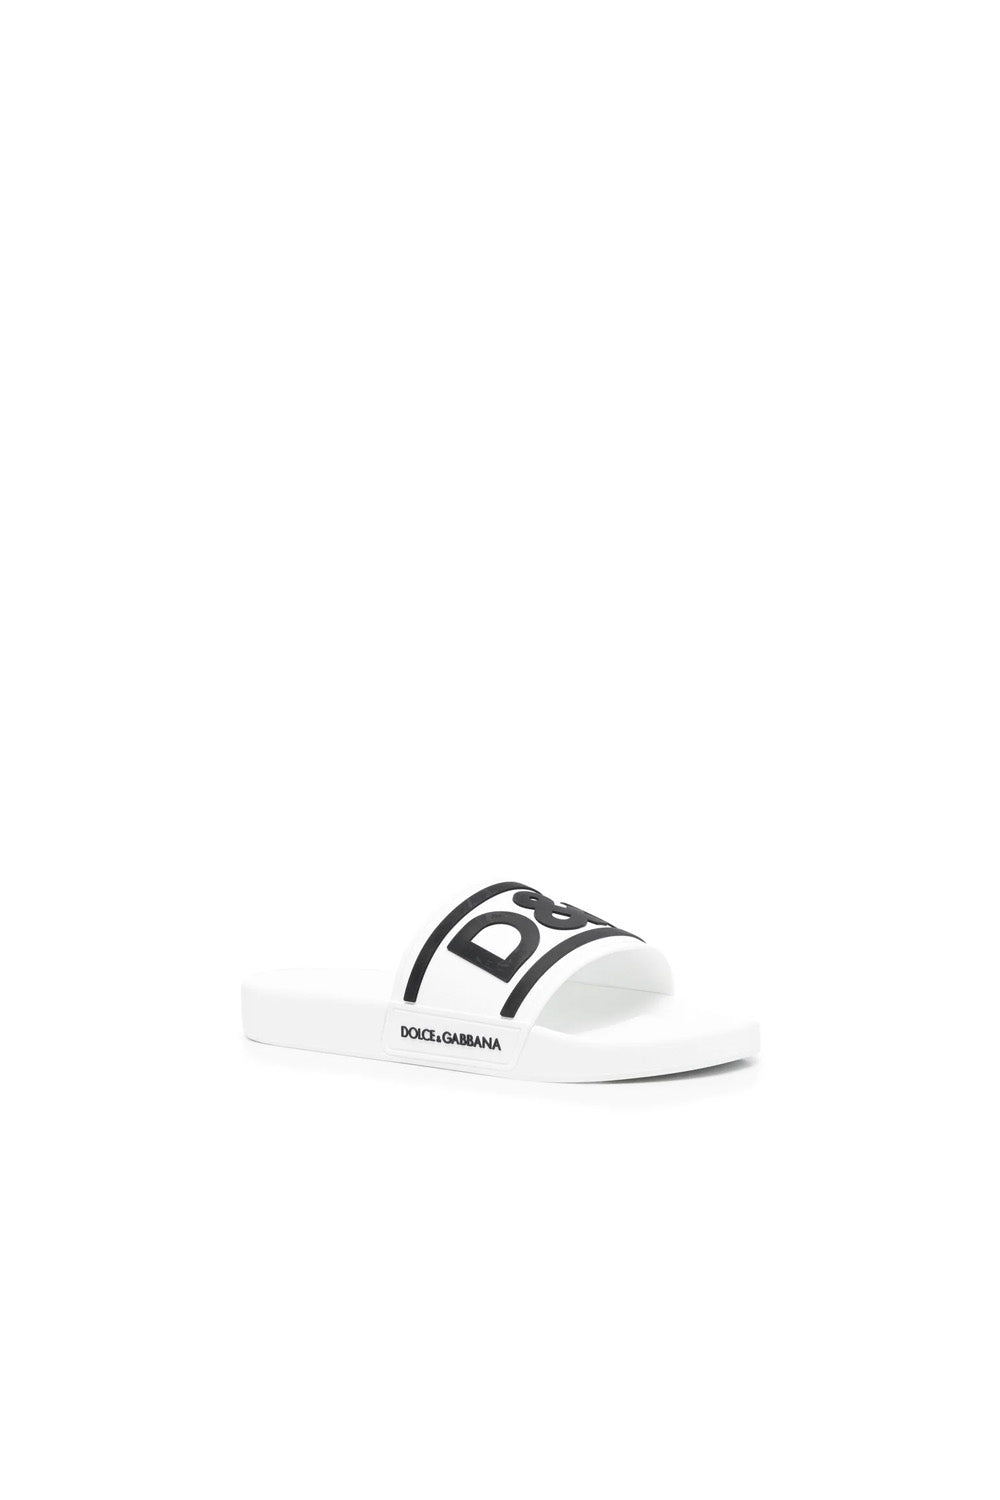 Dolce & Gabbana logo-print beach sliders white